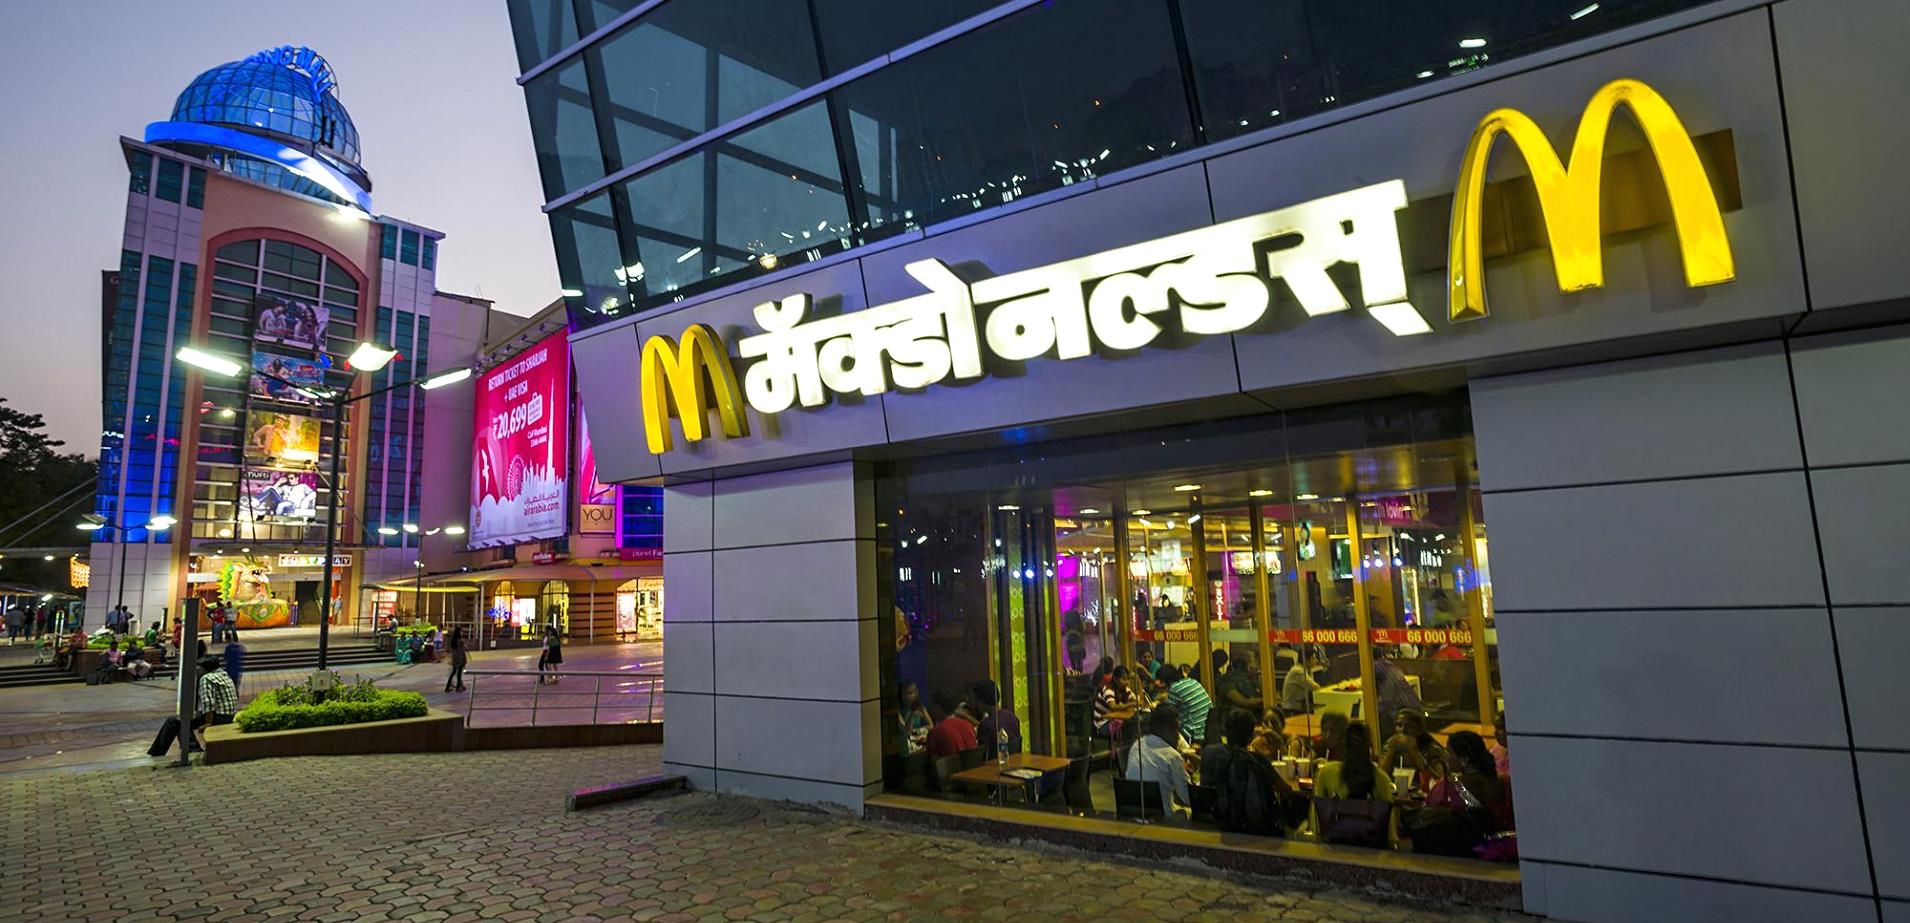 McDonalds in India, joint venture